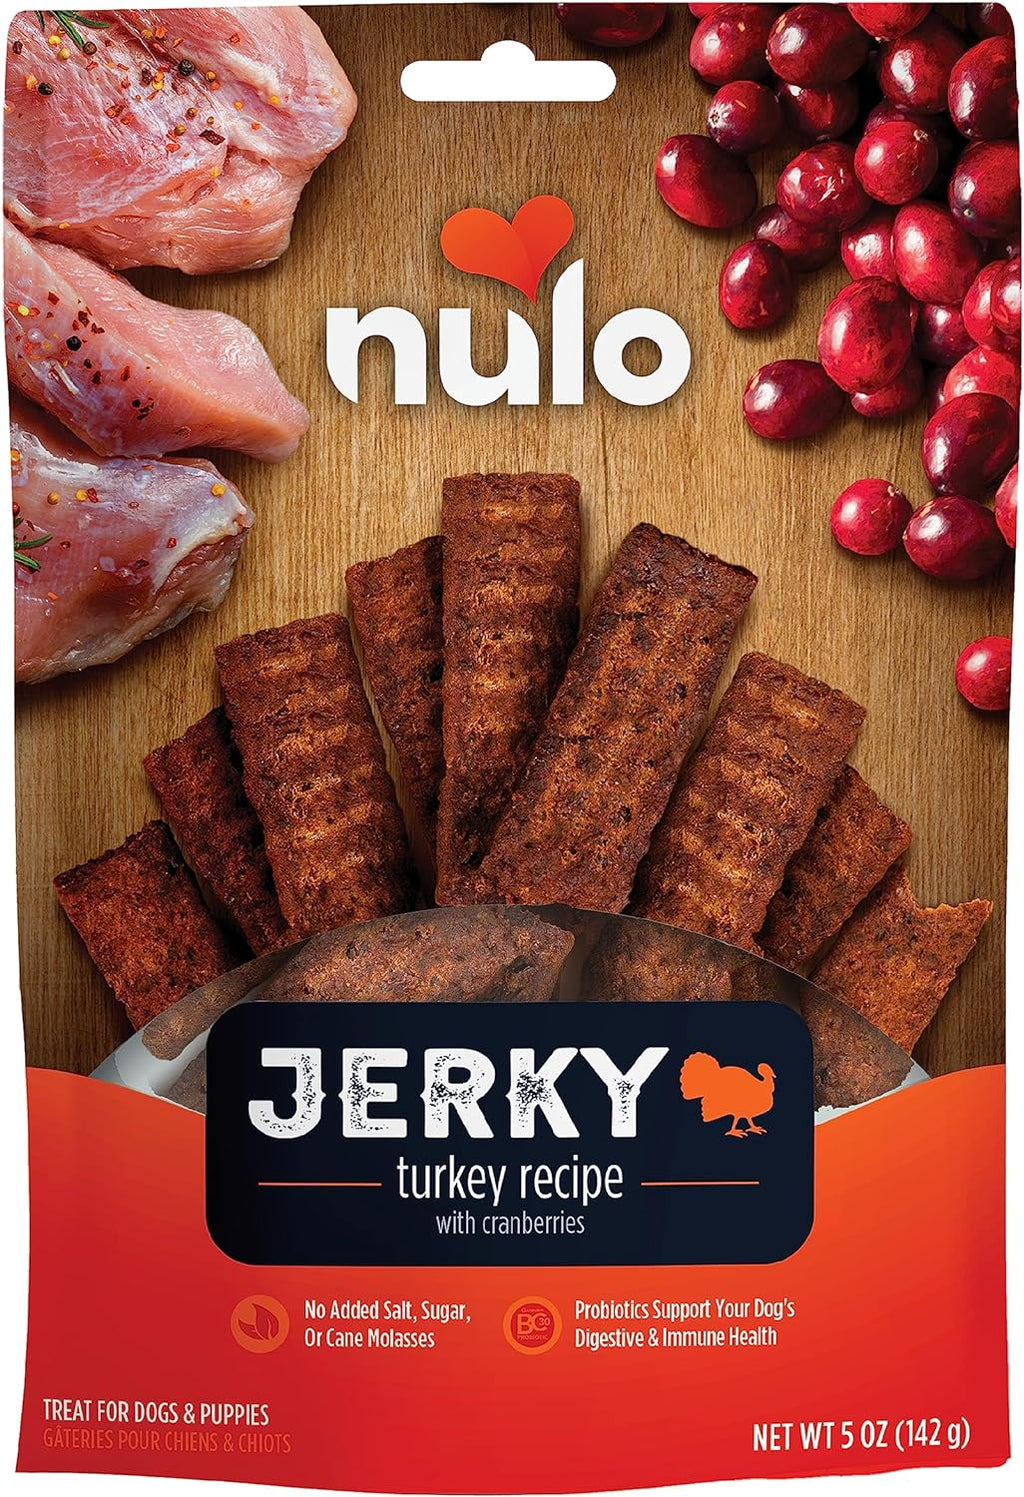 Turkey FreeStyle Jerky Strips by Nulo